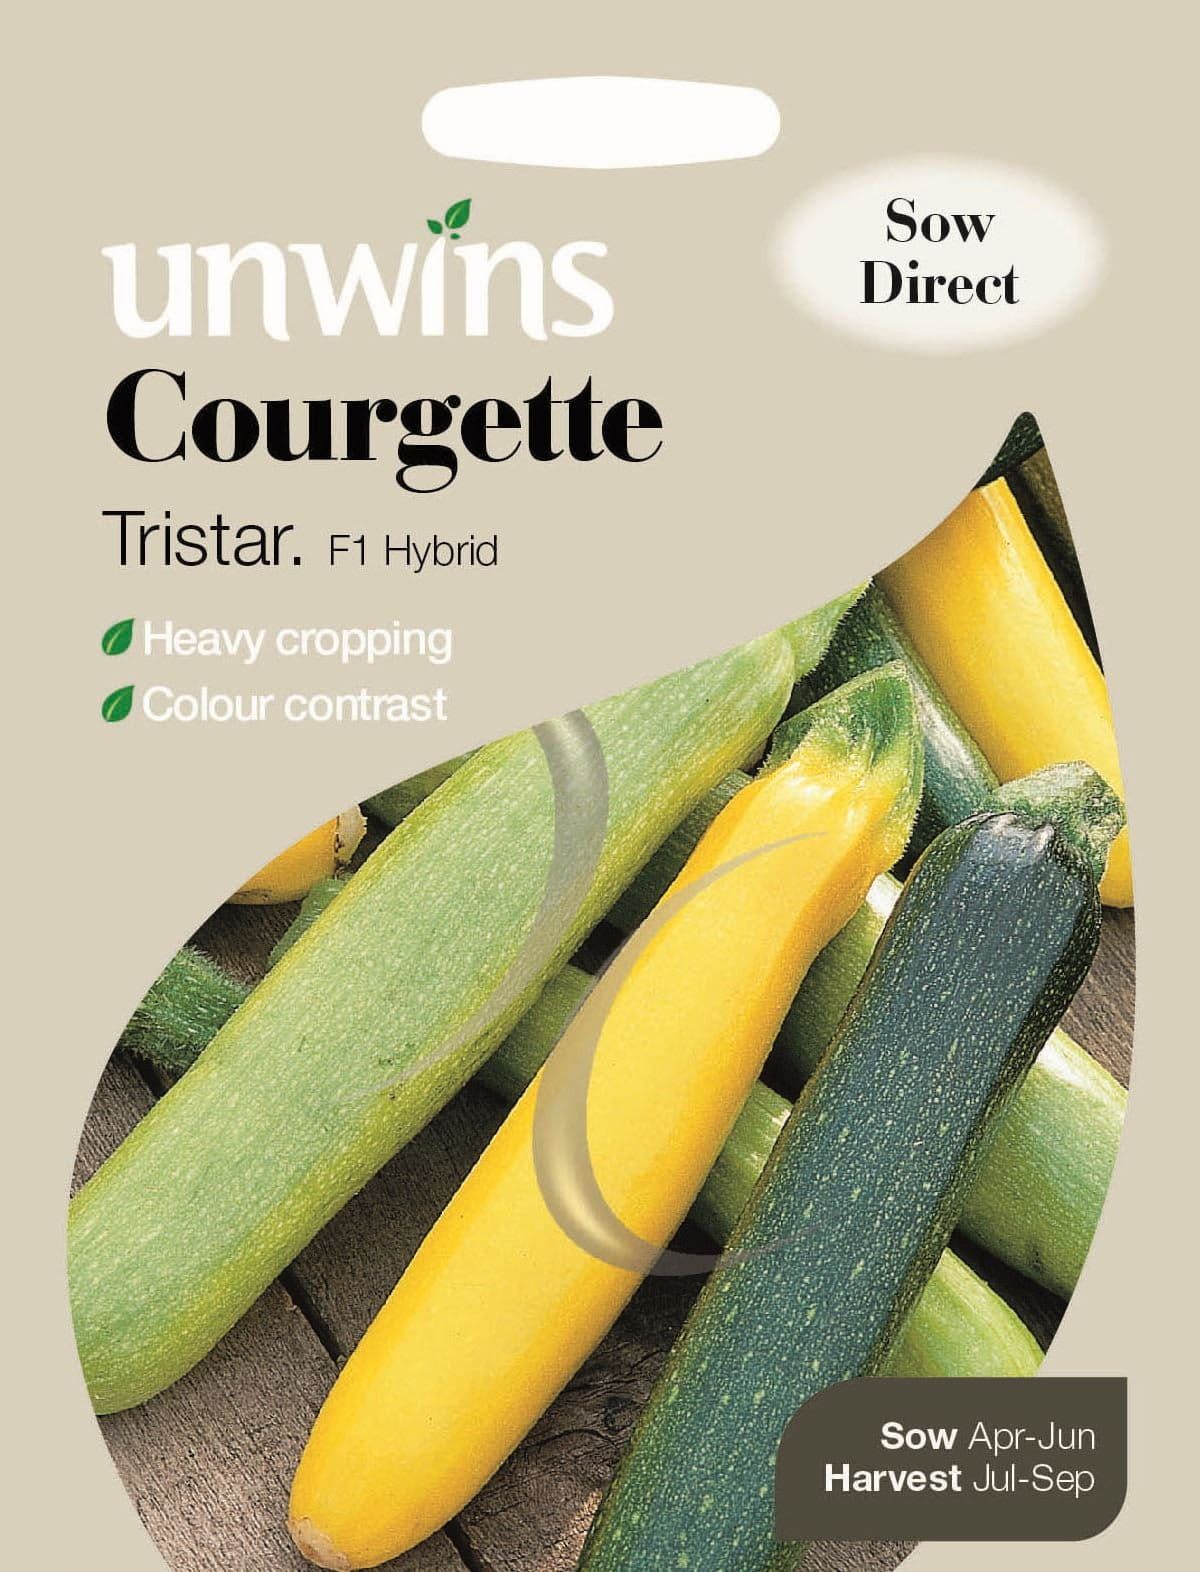 Unwins Courgette Tristar F1 8 Seeds